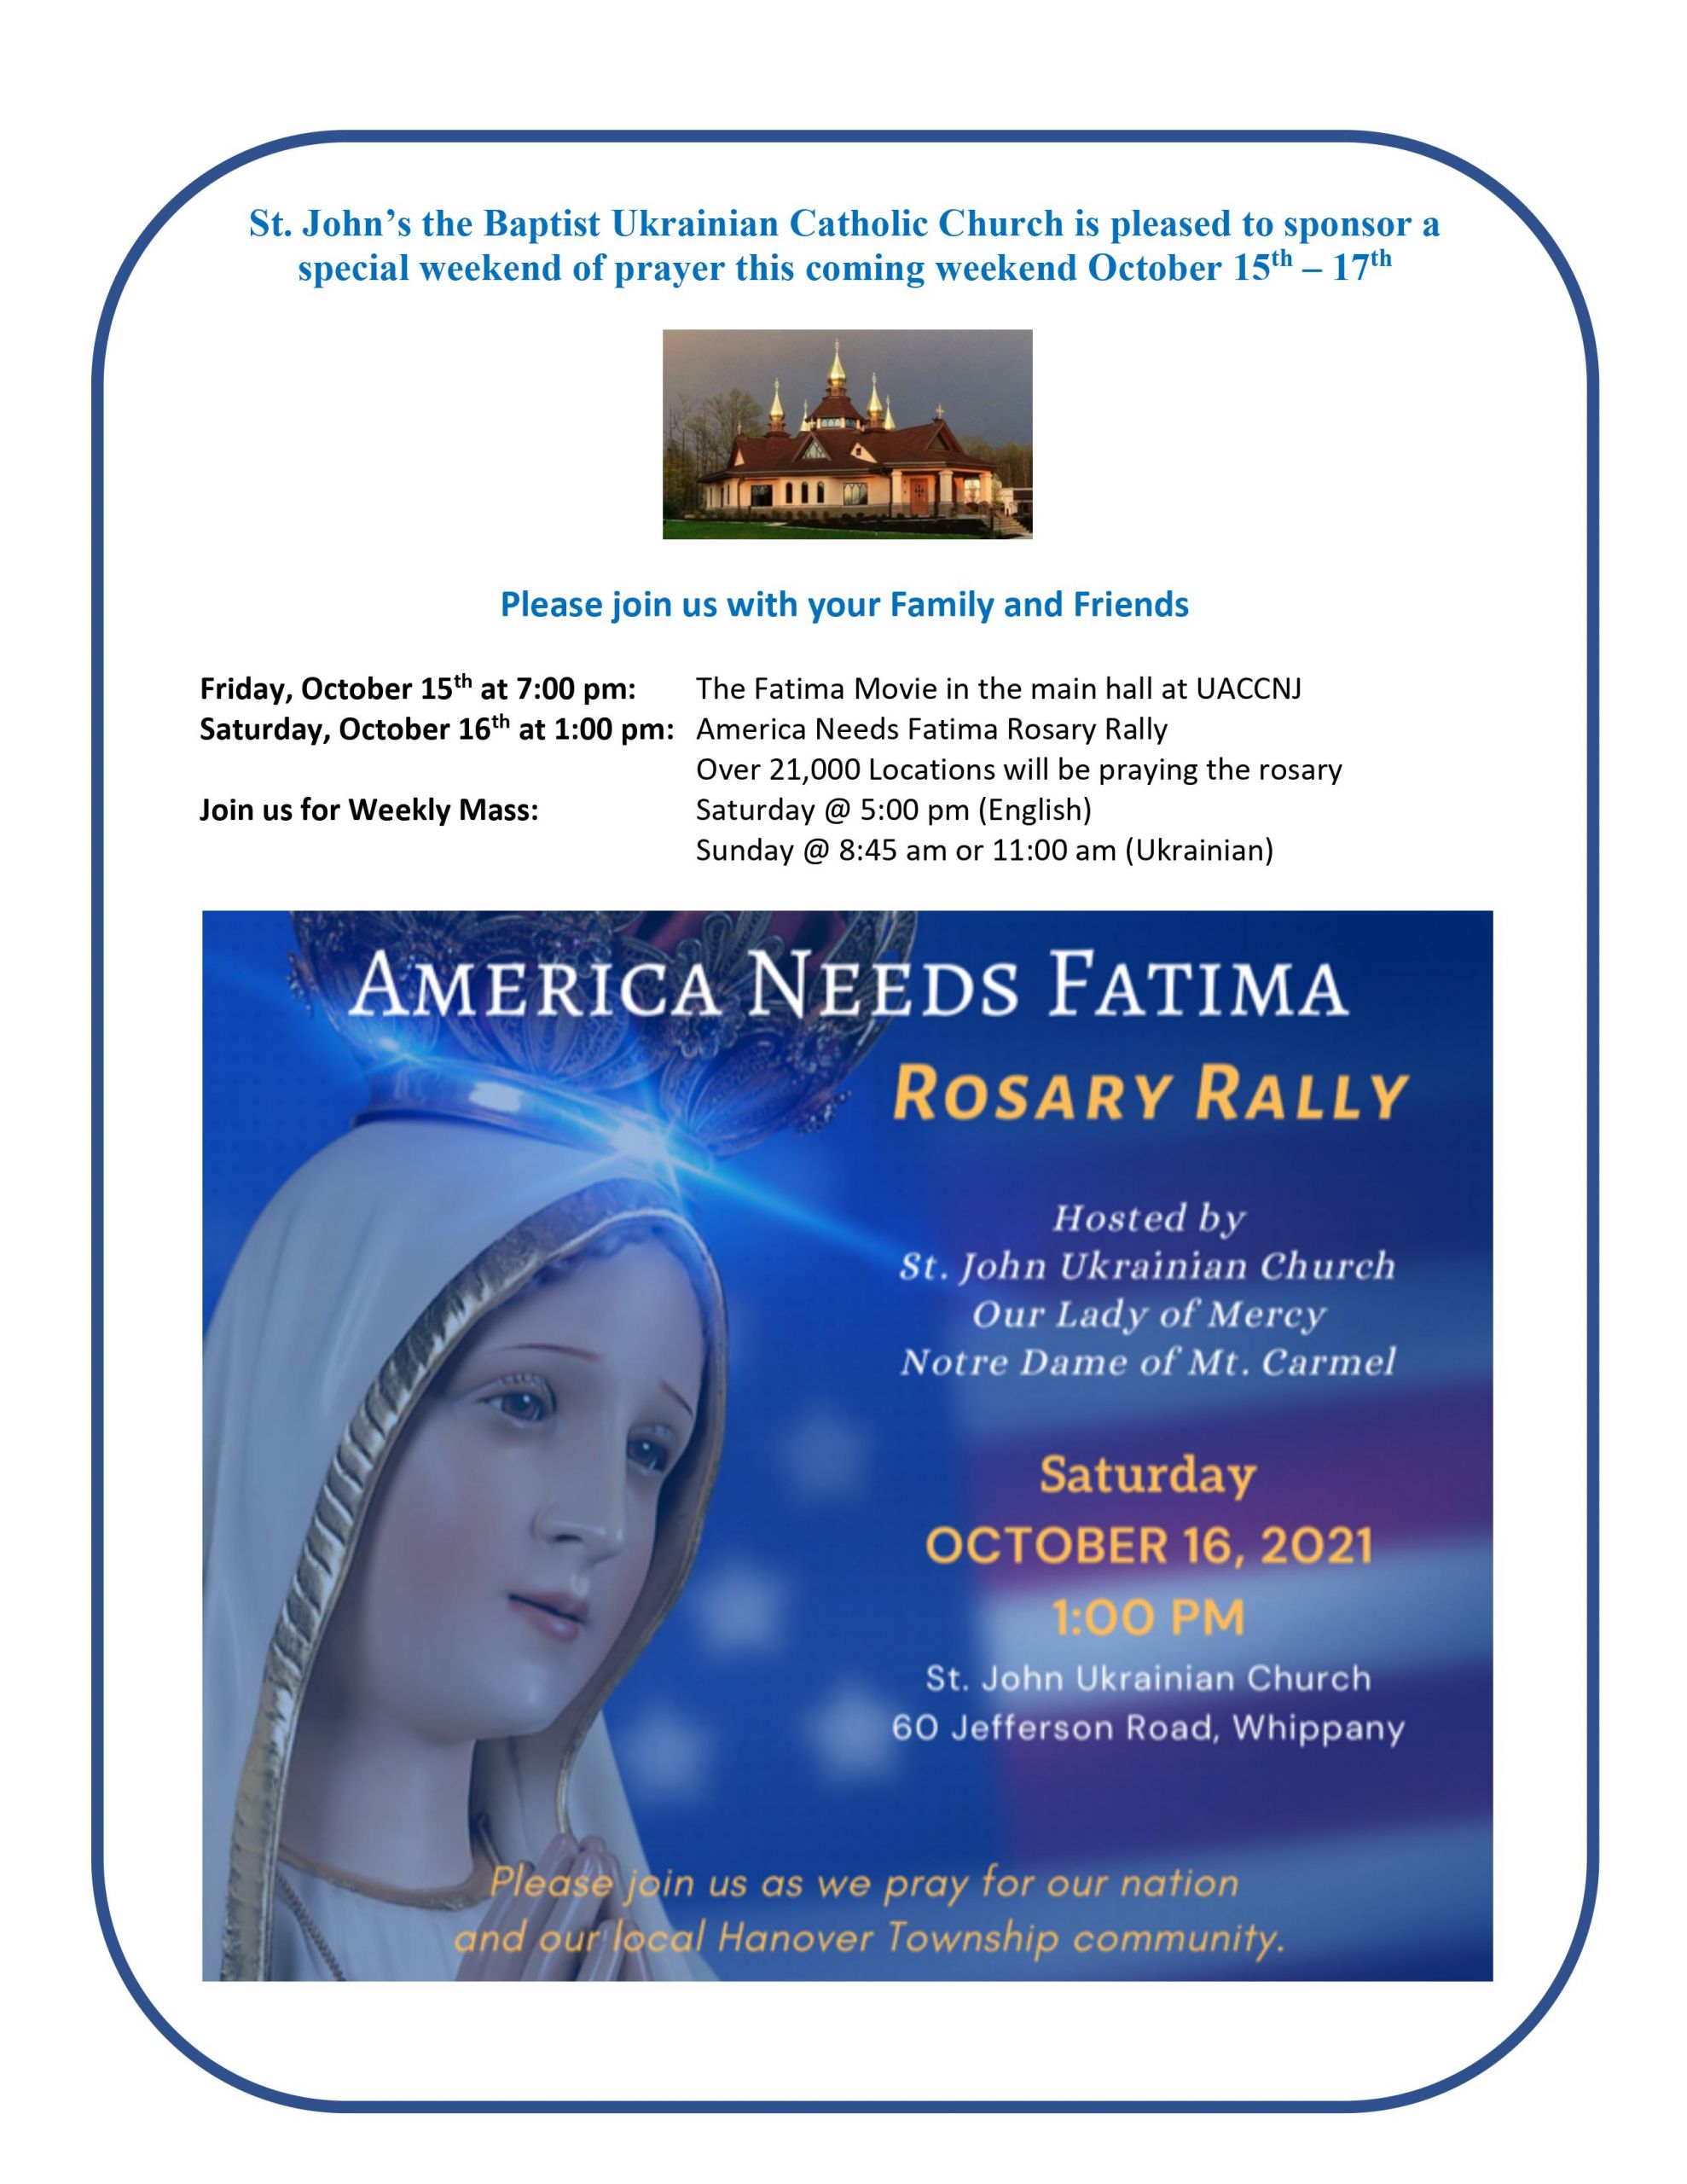 America Needs Fatima Rosary Rally scaled America Needs Fatima Rosary Rally scaled